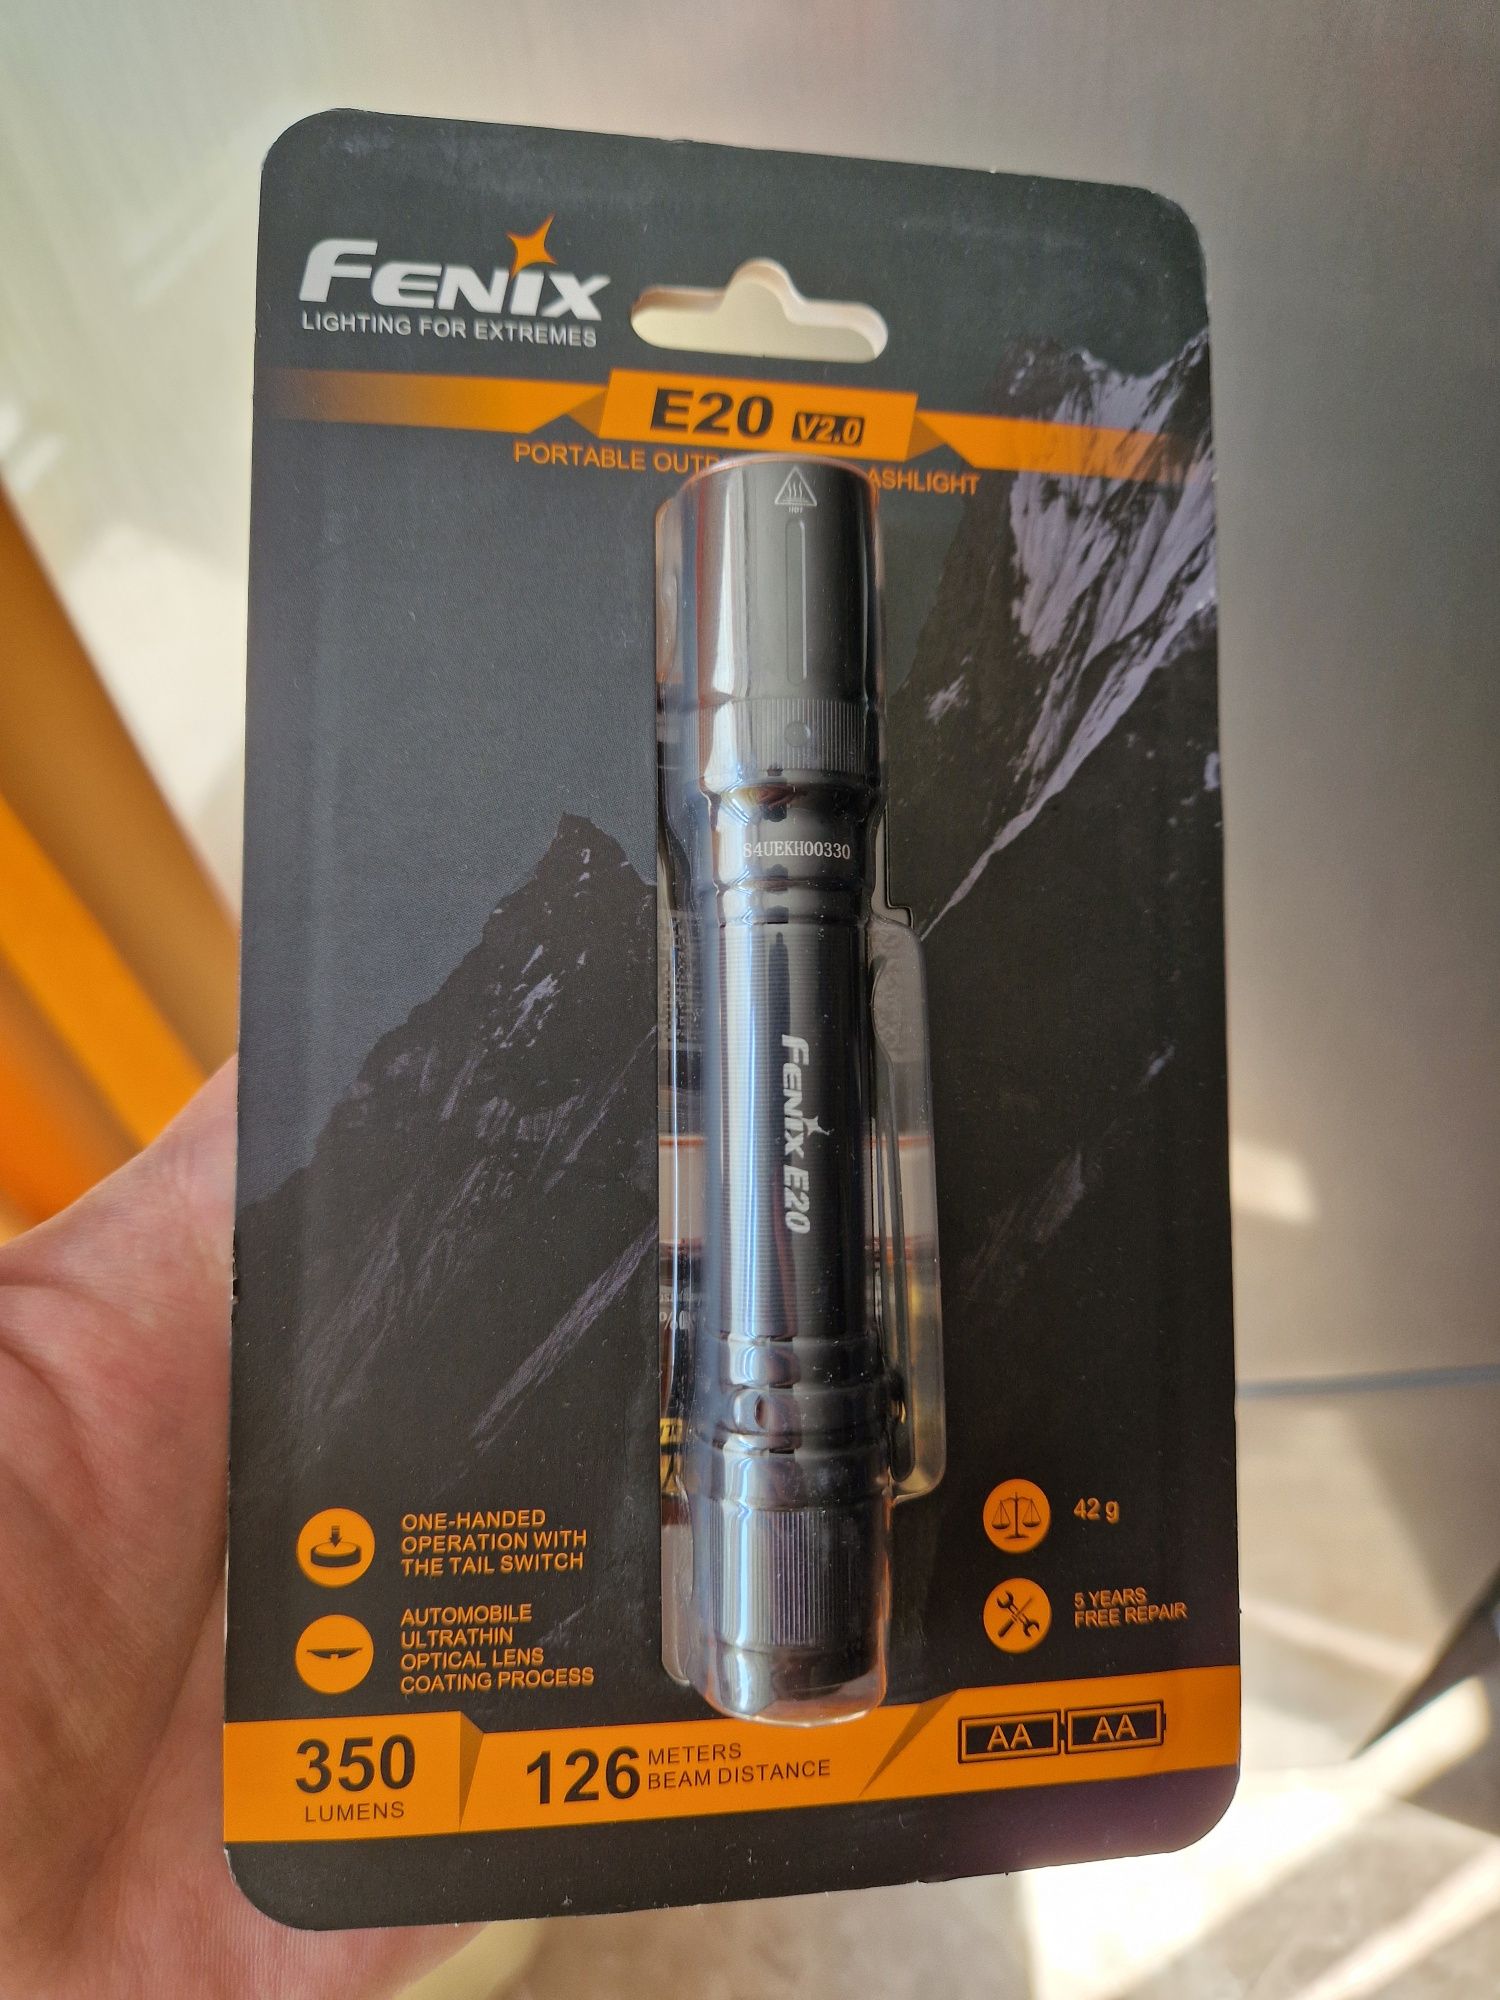 Ліхтарики Fenix E20 v2.0